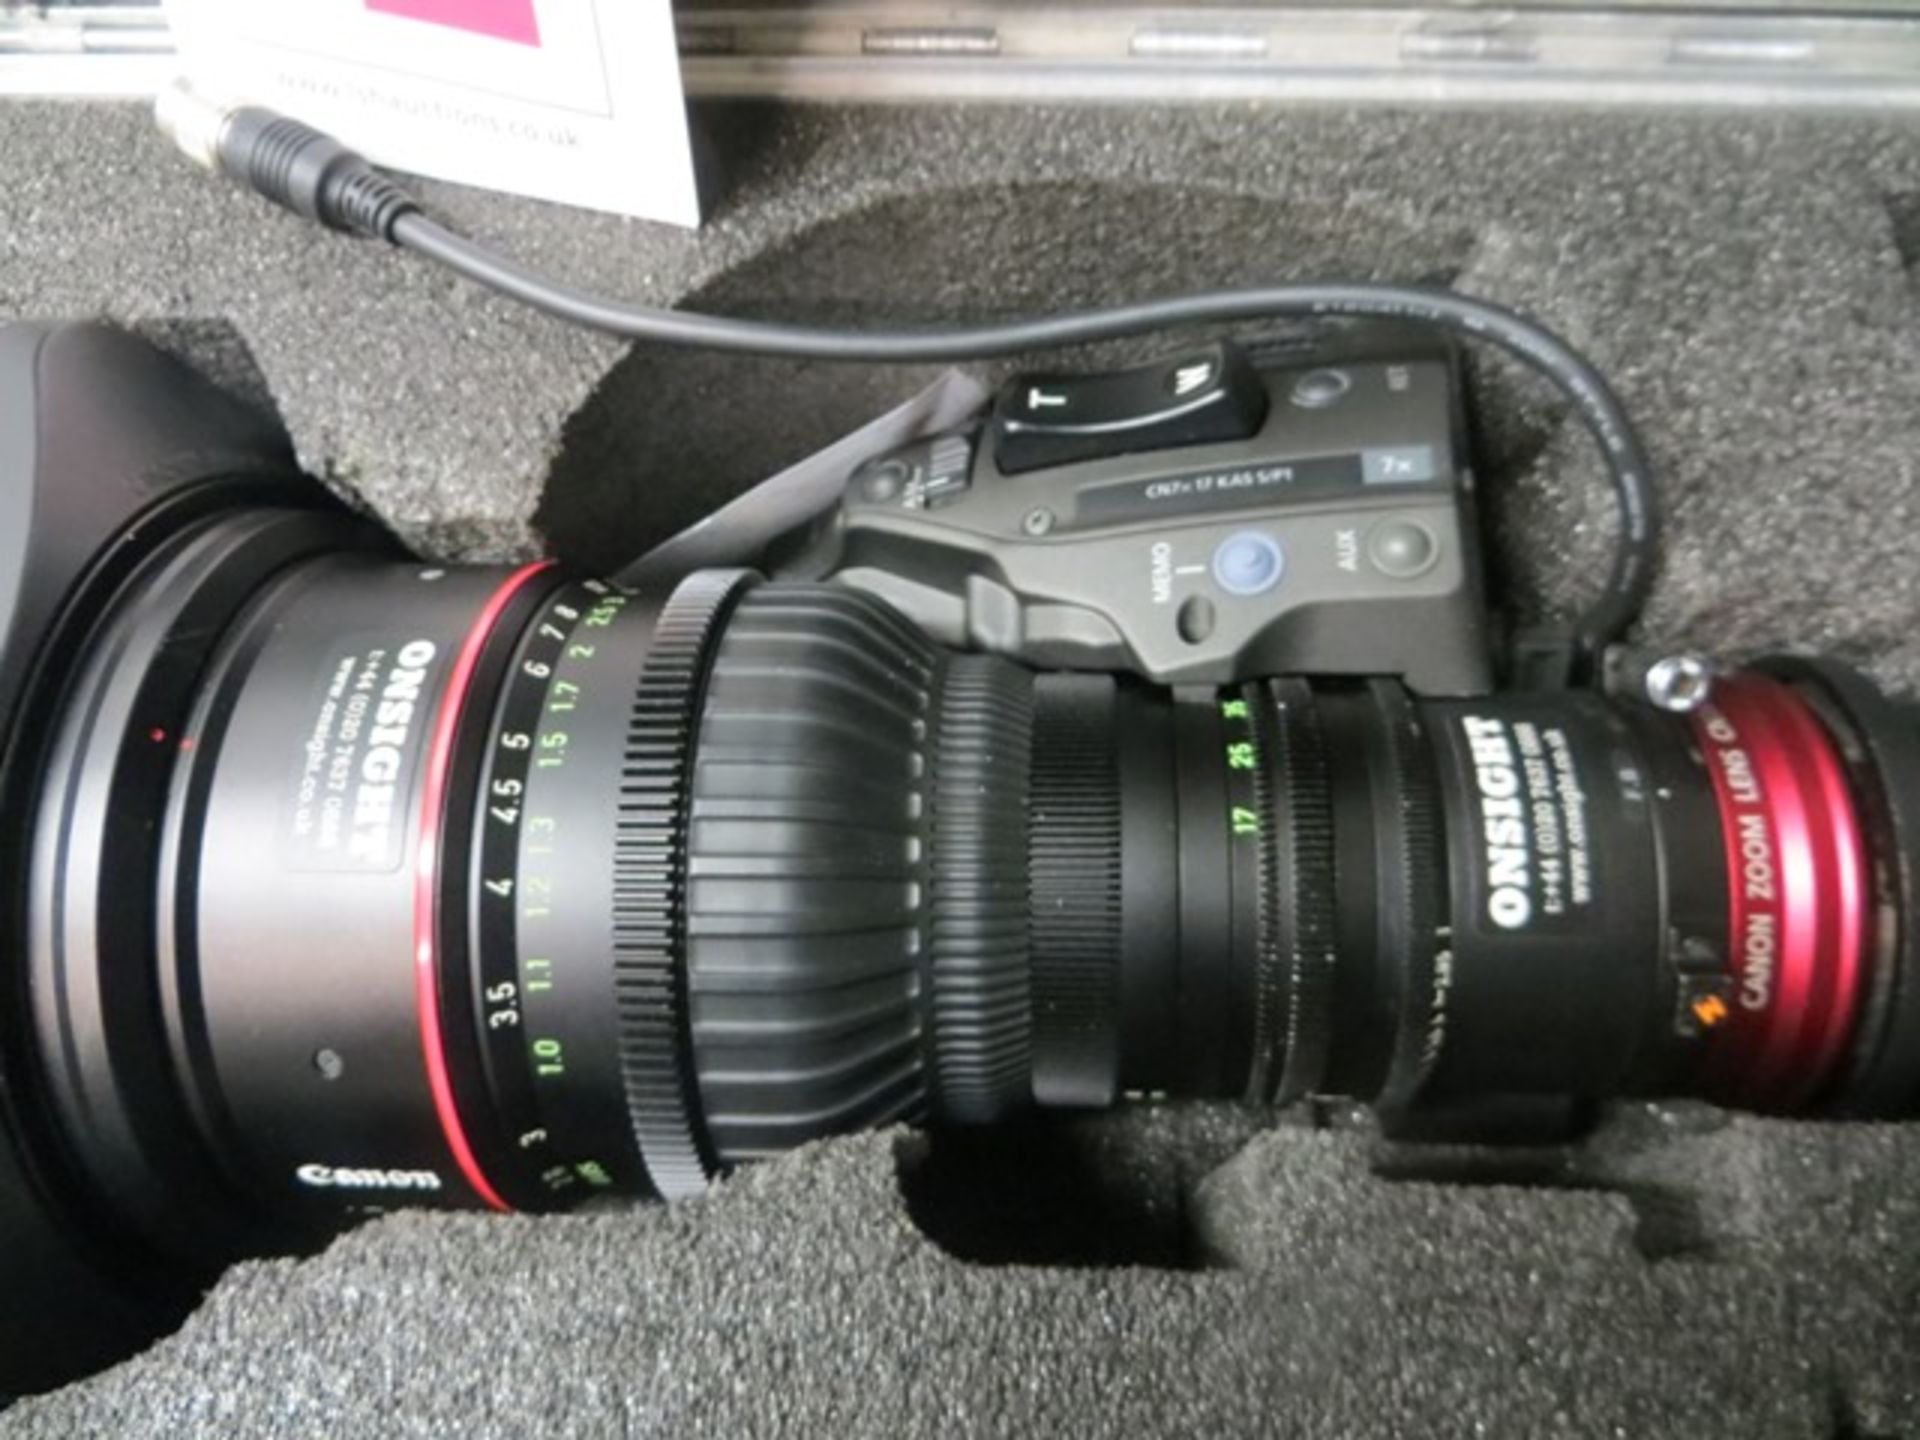 Canon CN7X17 -120mm T2.95 KAS S/P1 Servo Lens s/n 93811391 c/w remote control & flight case - Image 2 of 2